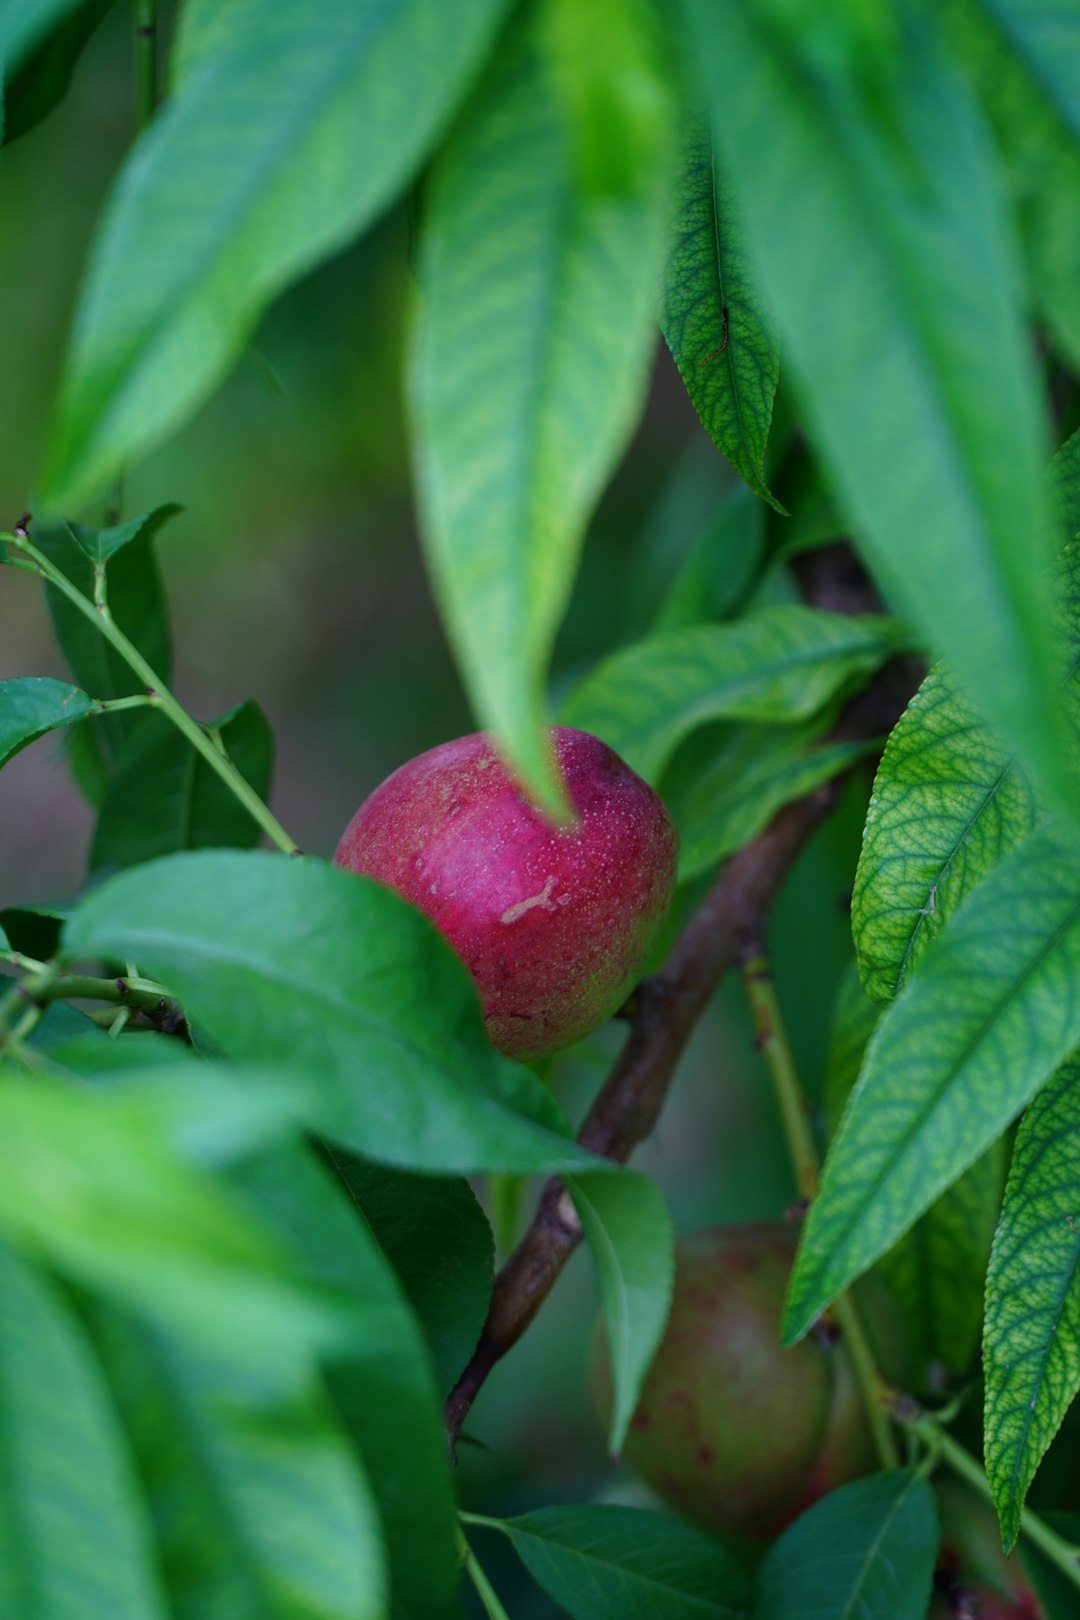 red apple fruit on green leaves